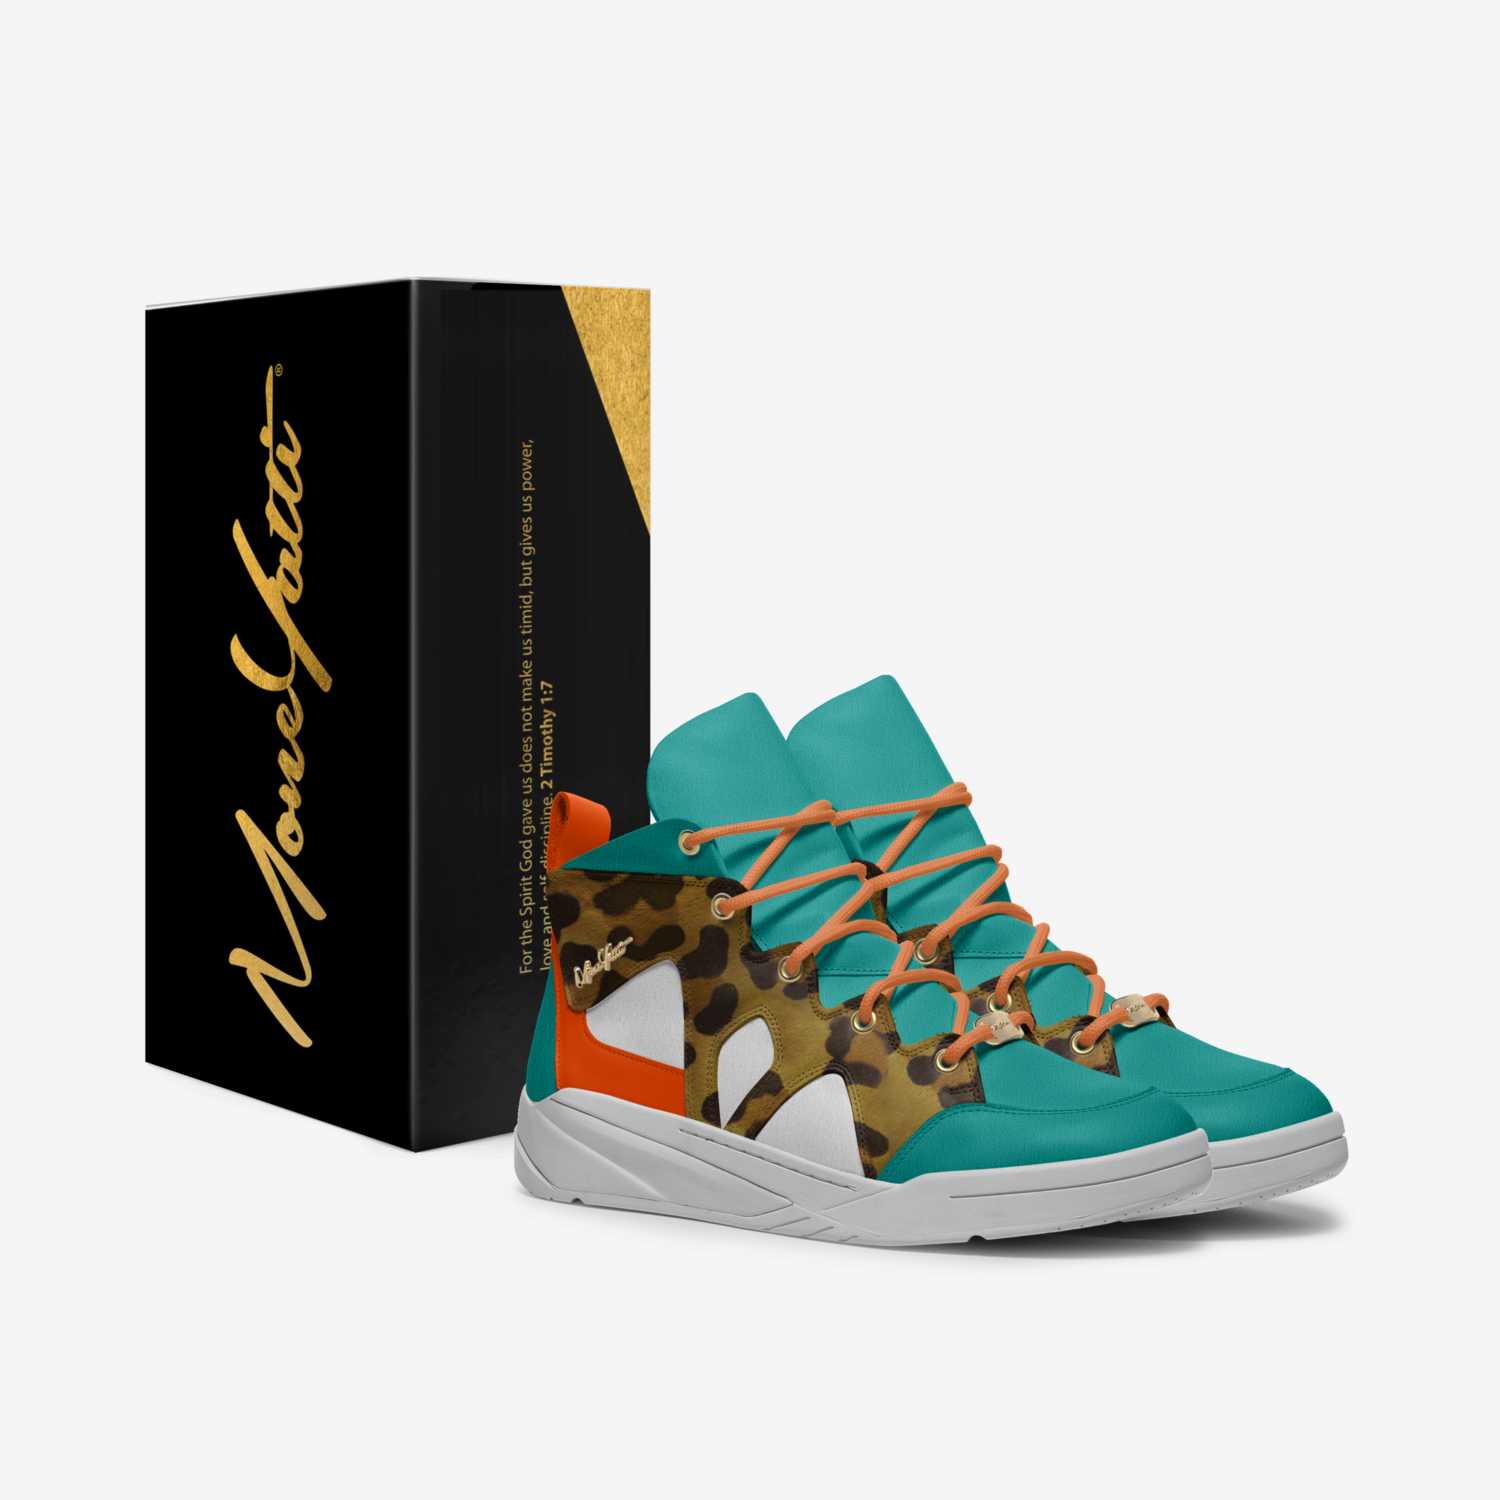 MONEYATTI TAKEOFF 014 custom made in Italy shoes by Moneyatti Brand | Box view